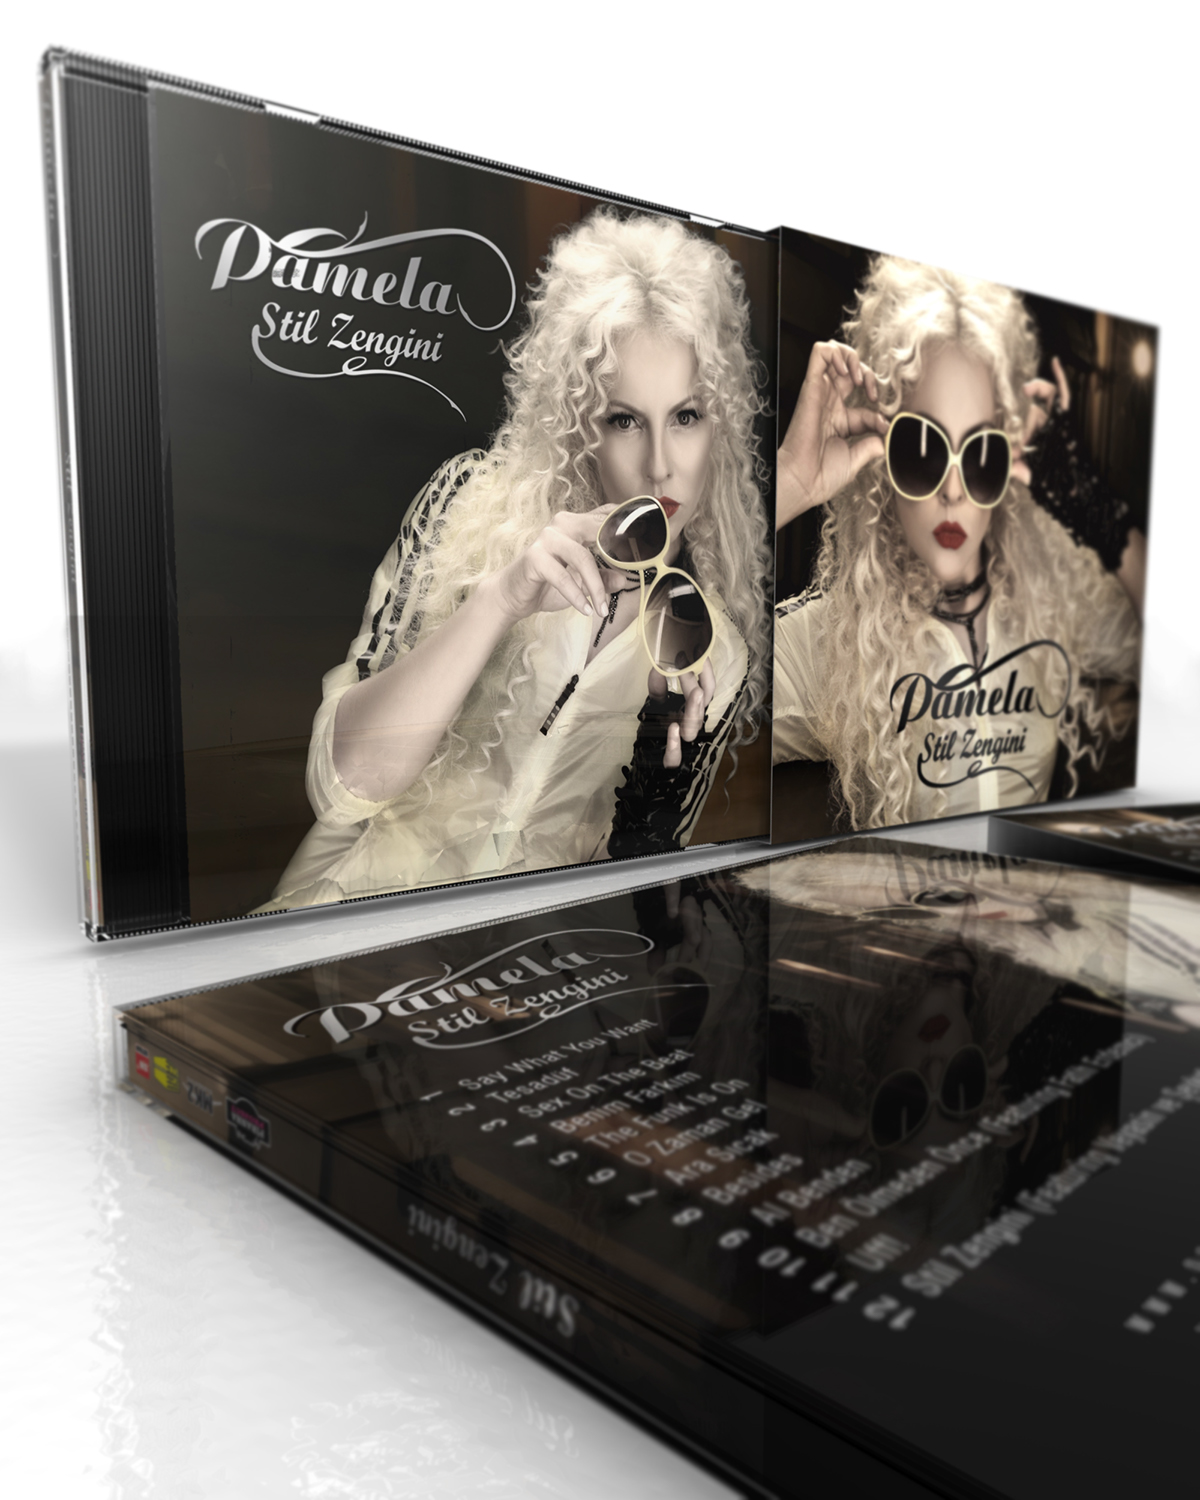 Pamela Spence  stil zengini  album cover cd Singer pop corporate  identity visual design sertaç serez sertacserez graphic grafik